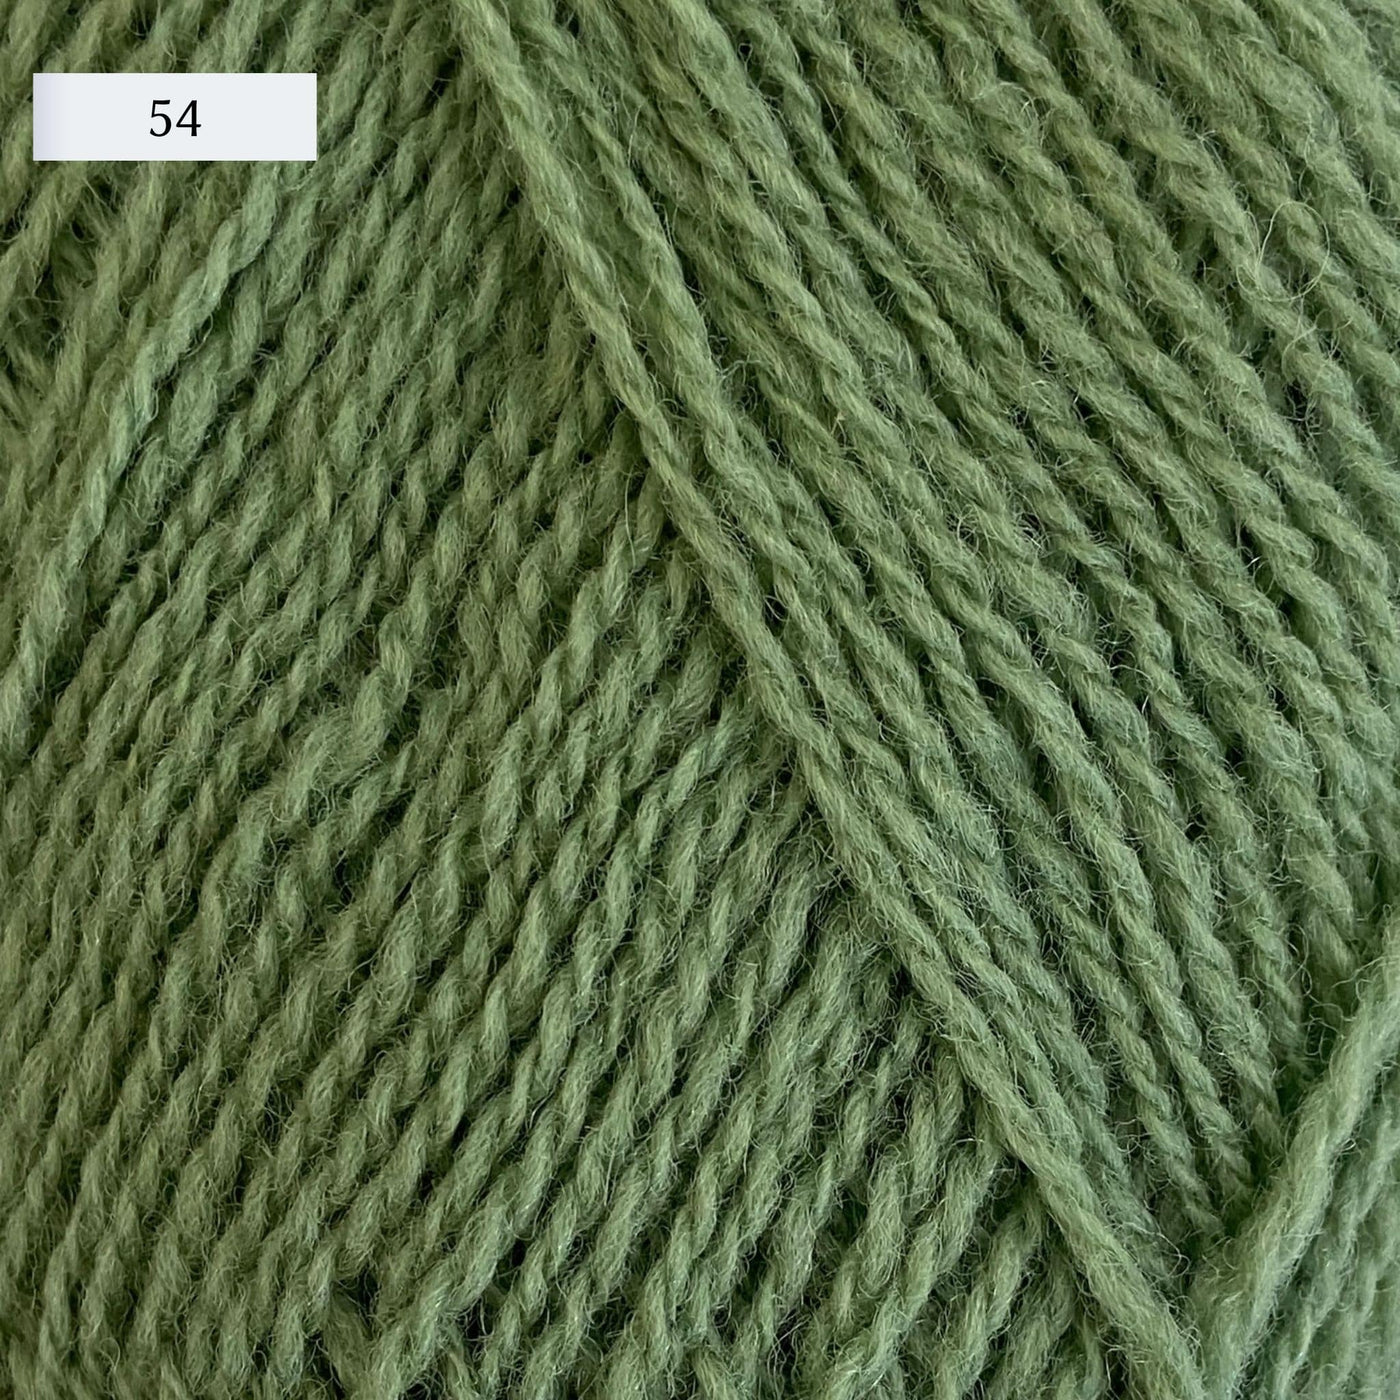 Rauma Lamullgarn, a fingering weight yarn, in color 54, a light cool grass green